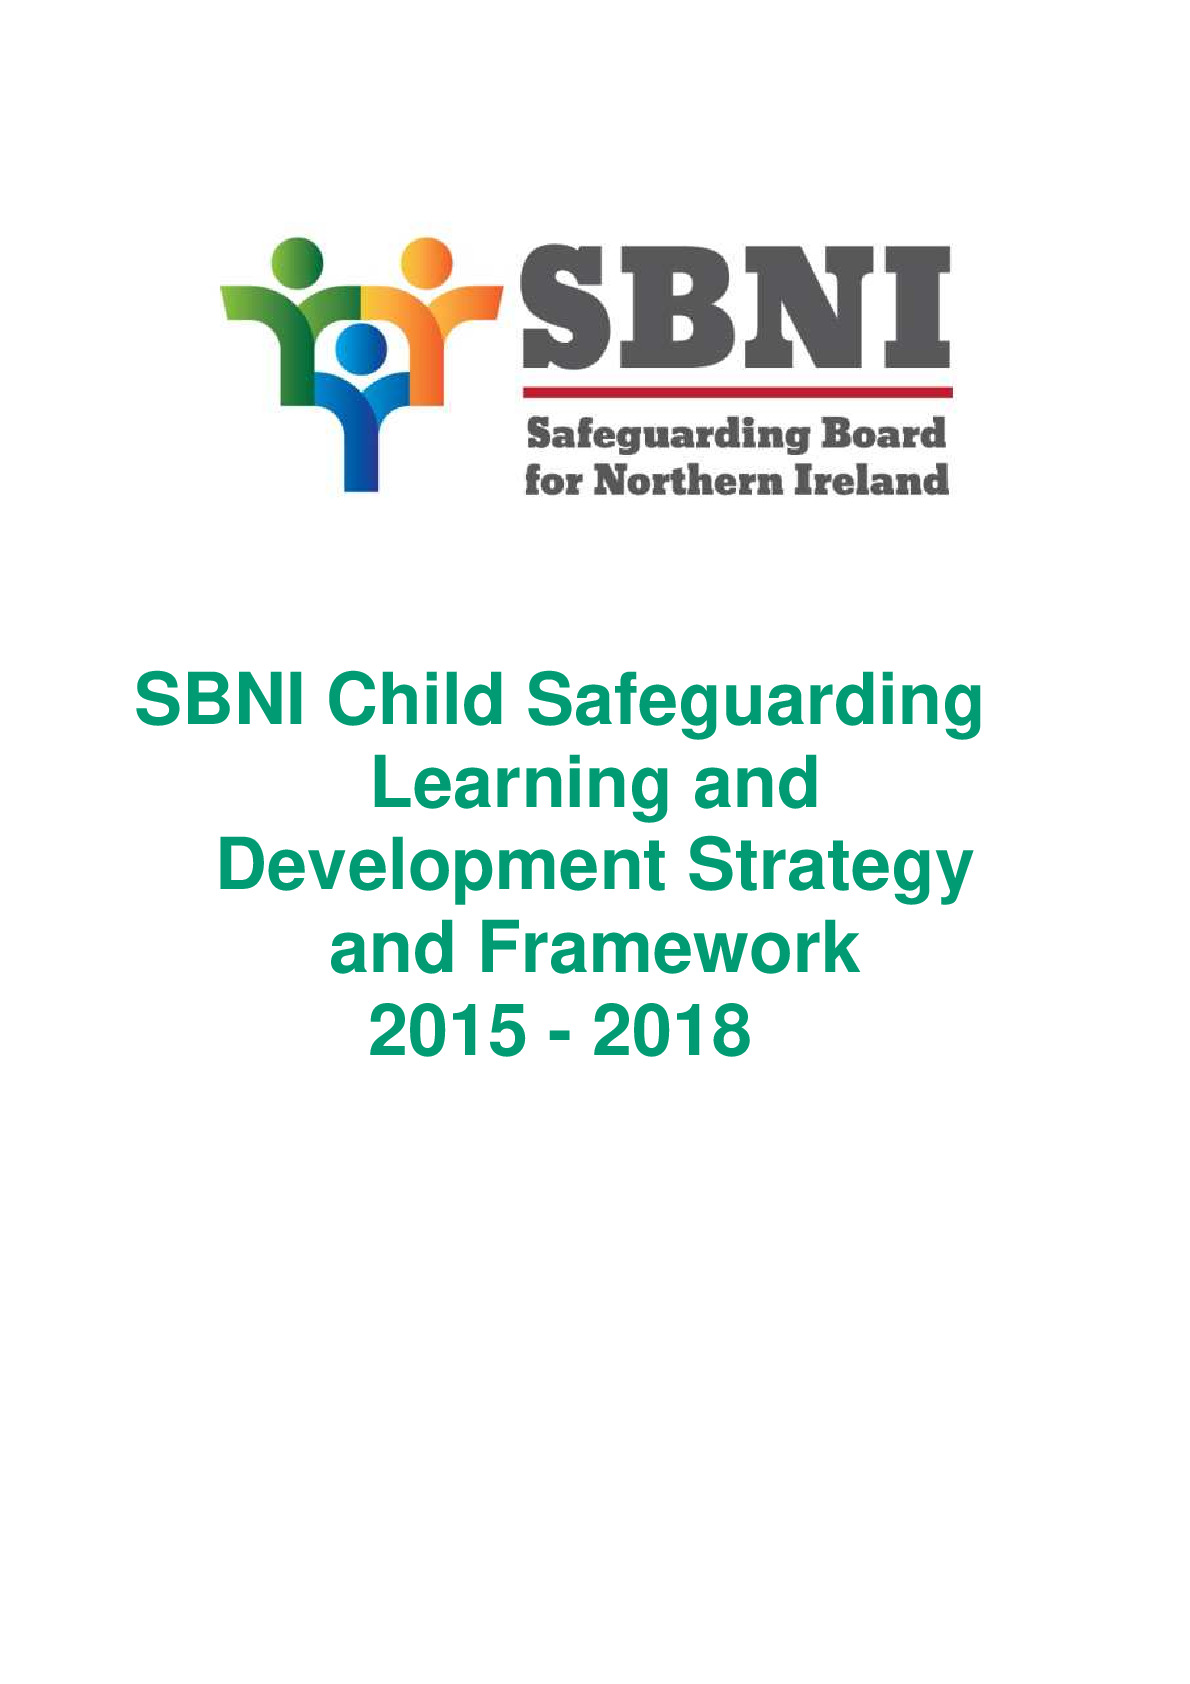 Final Version Sept 2015 SBNI Child Safeguarding Learning and Development Strategy and Framework 2015 - 2018 Final V_0